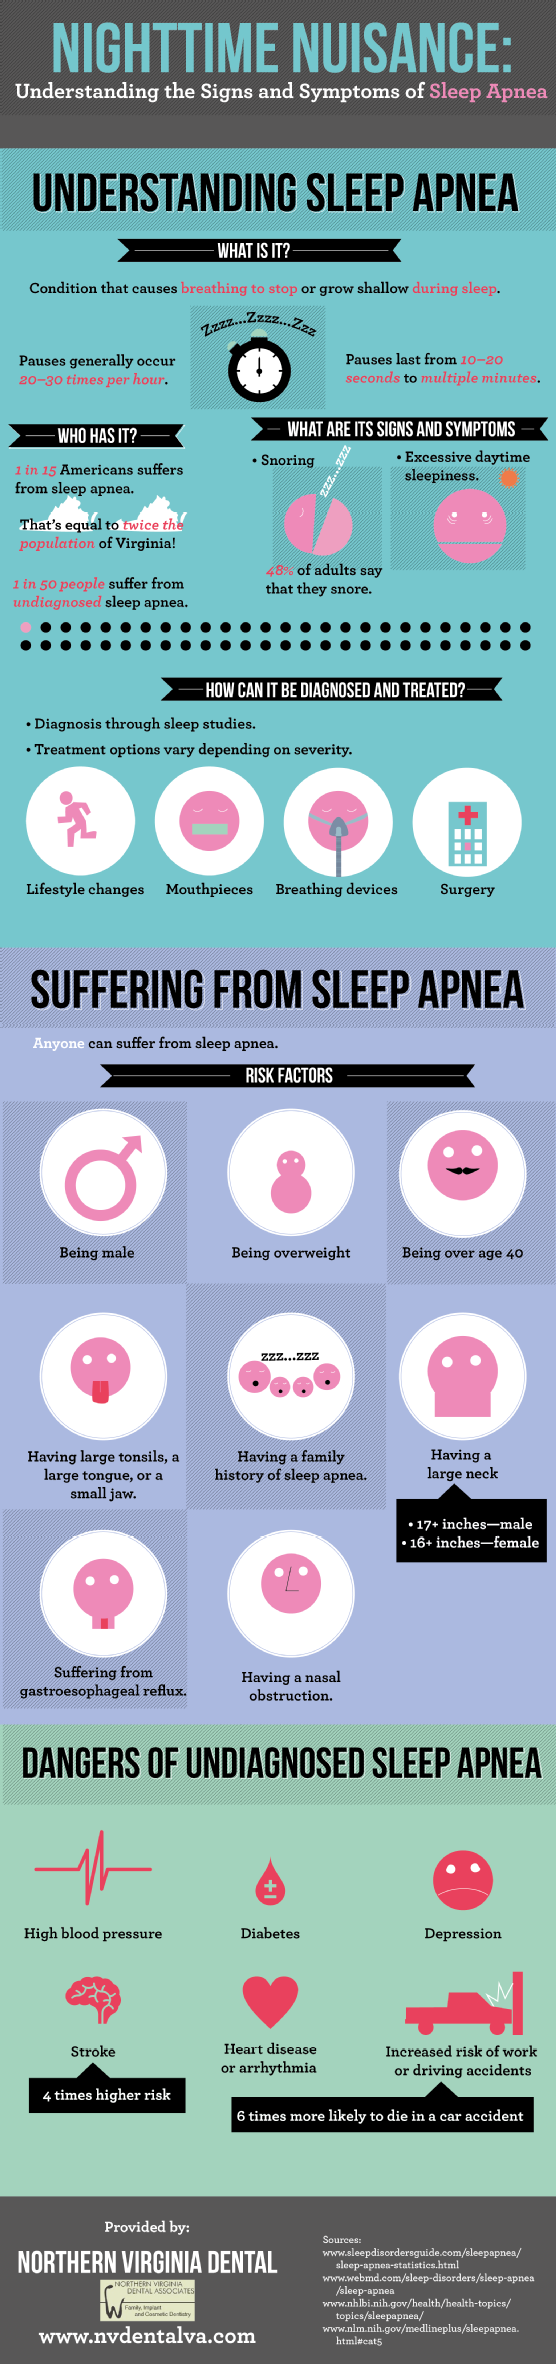 Night time nuisance: Understanding Sleep apnoea